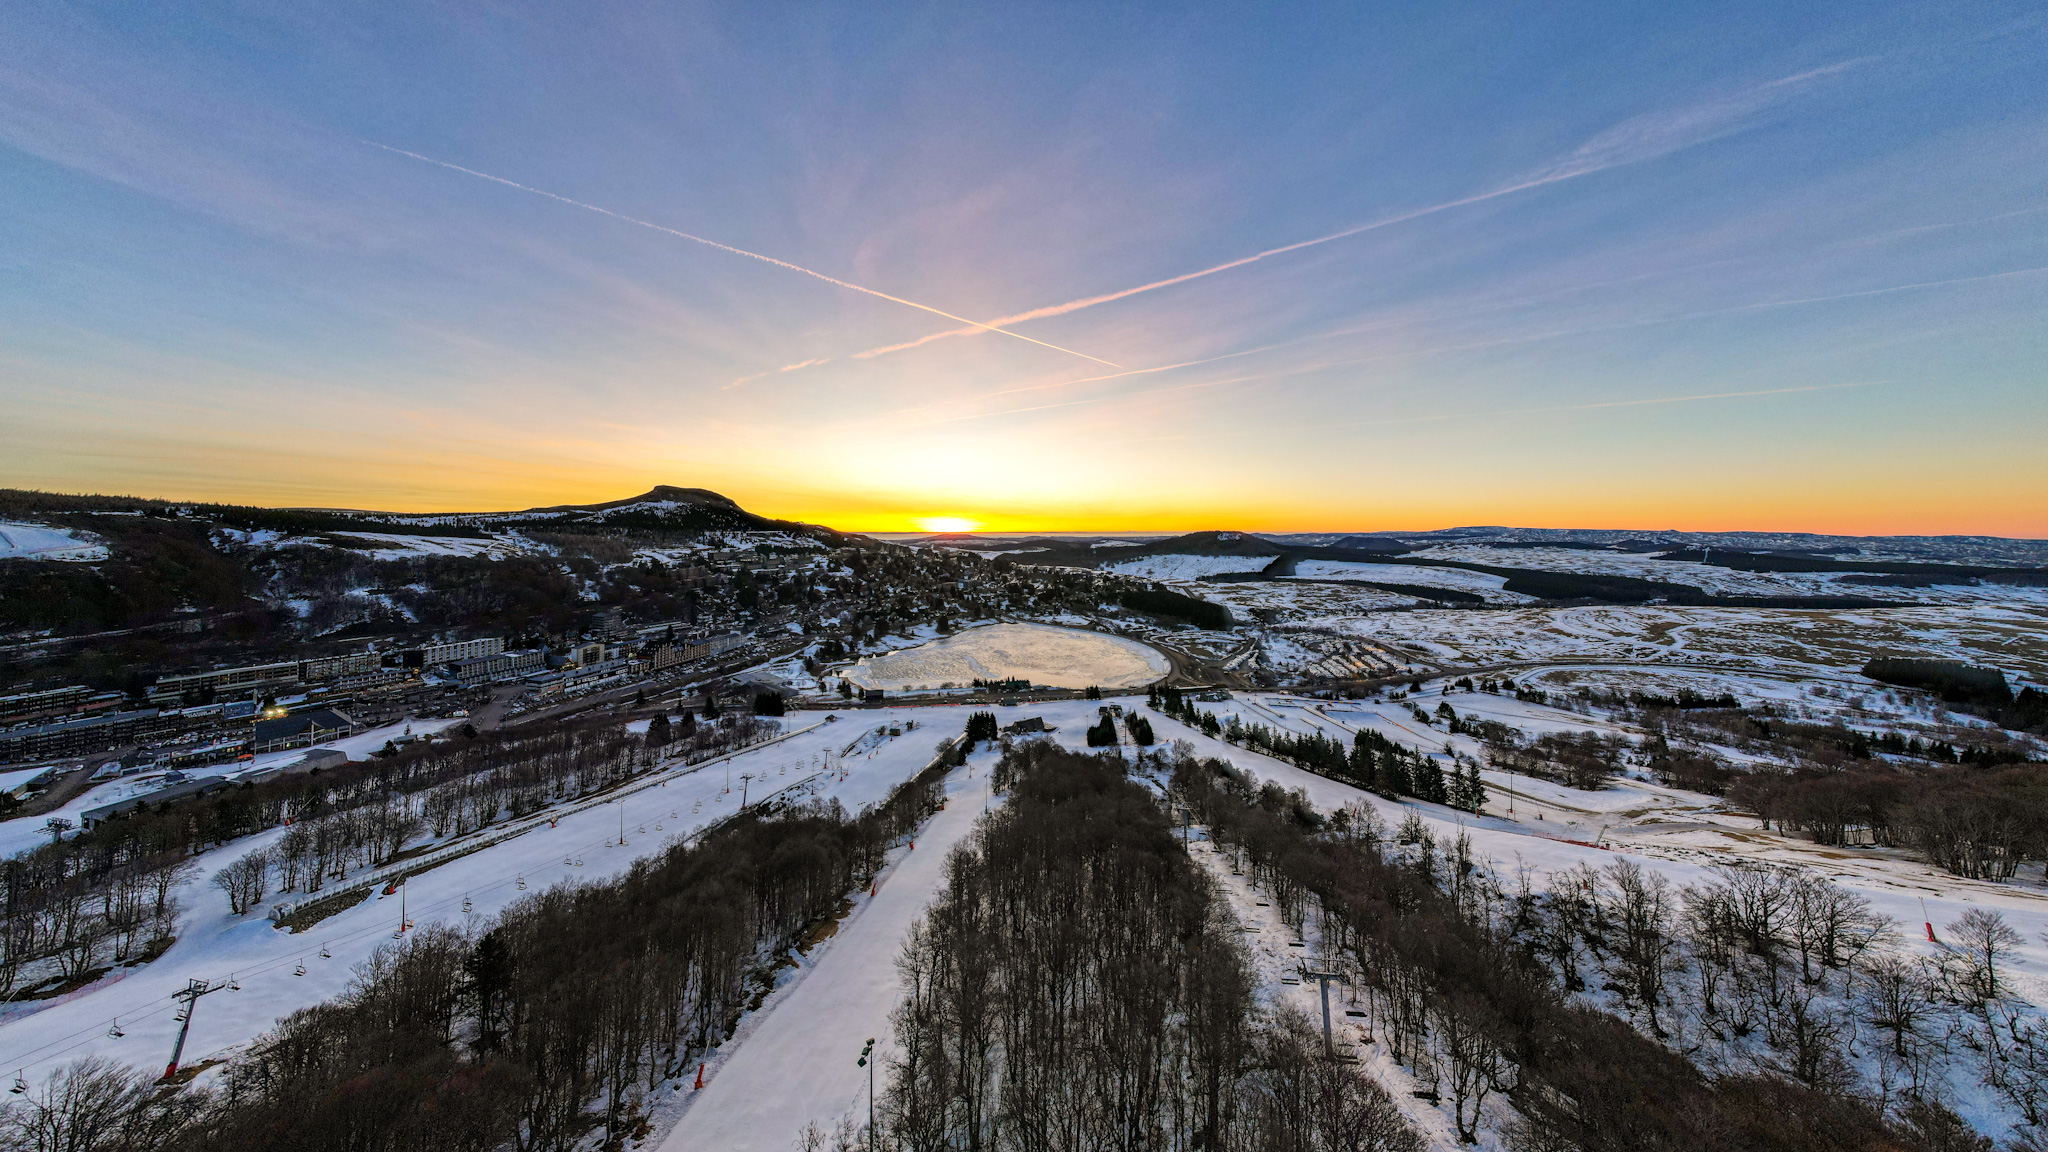 Sunrise over the Super Besse winter sports resort